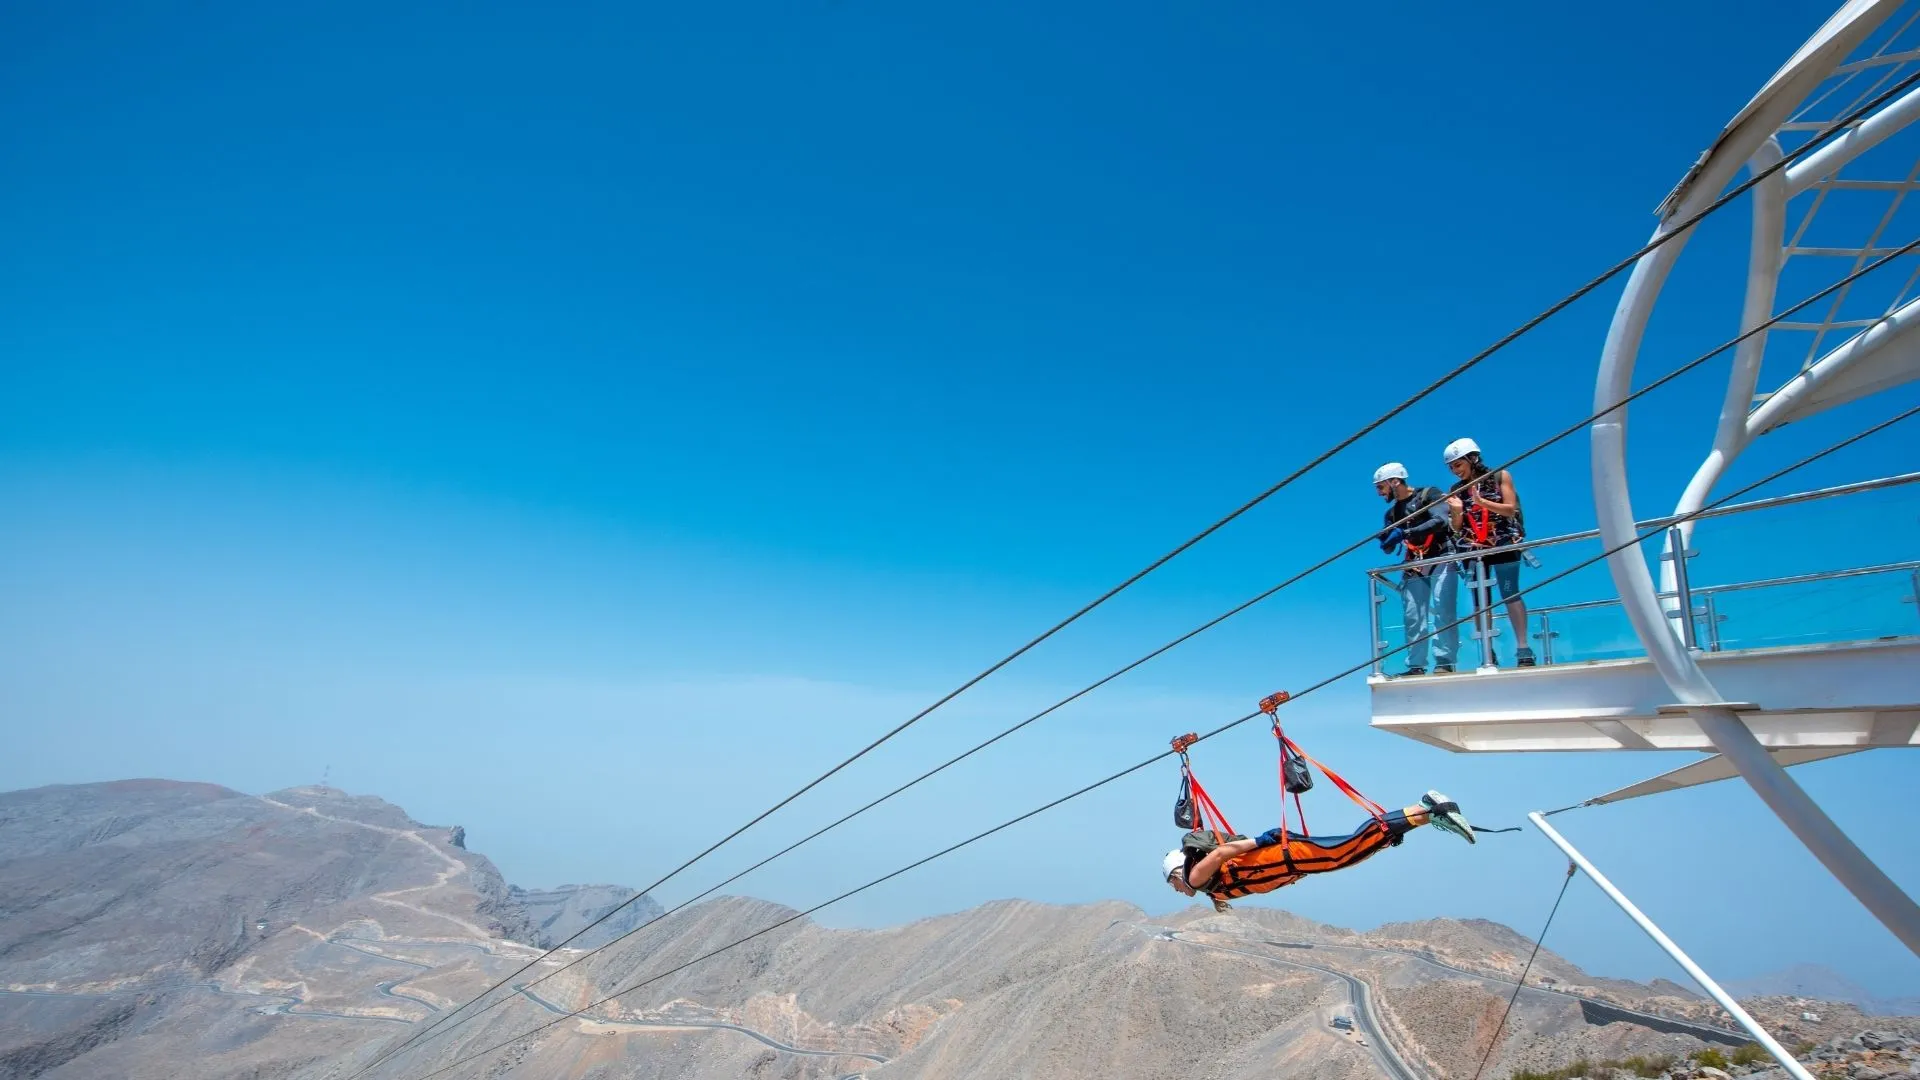 Ras Al Khaimah Zip Line in United Arab Emirates, Middle East | Zip Lines,Adrenaline Adventures - Rated 4